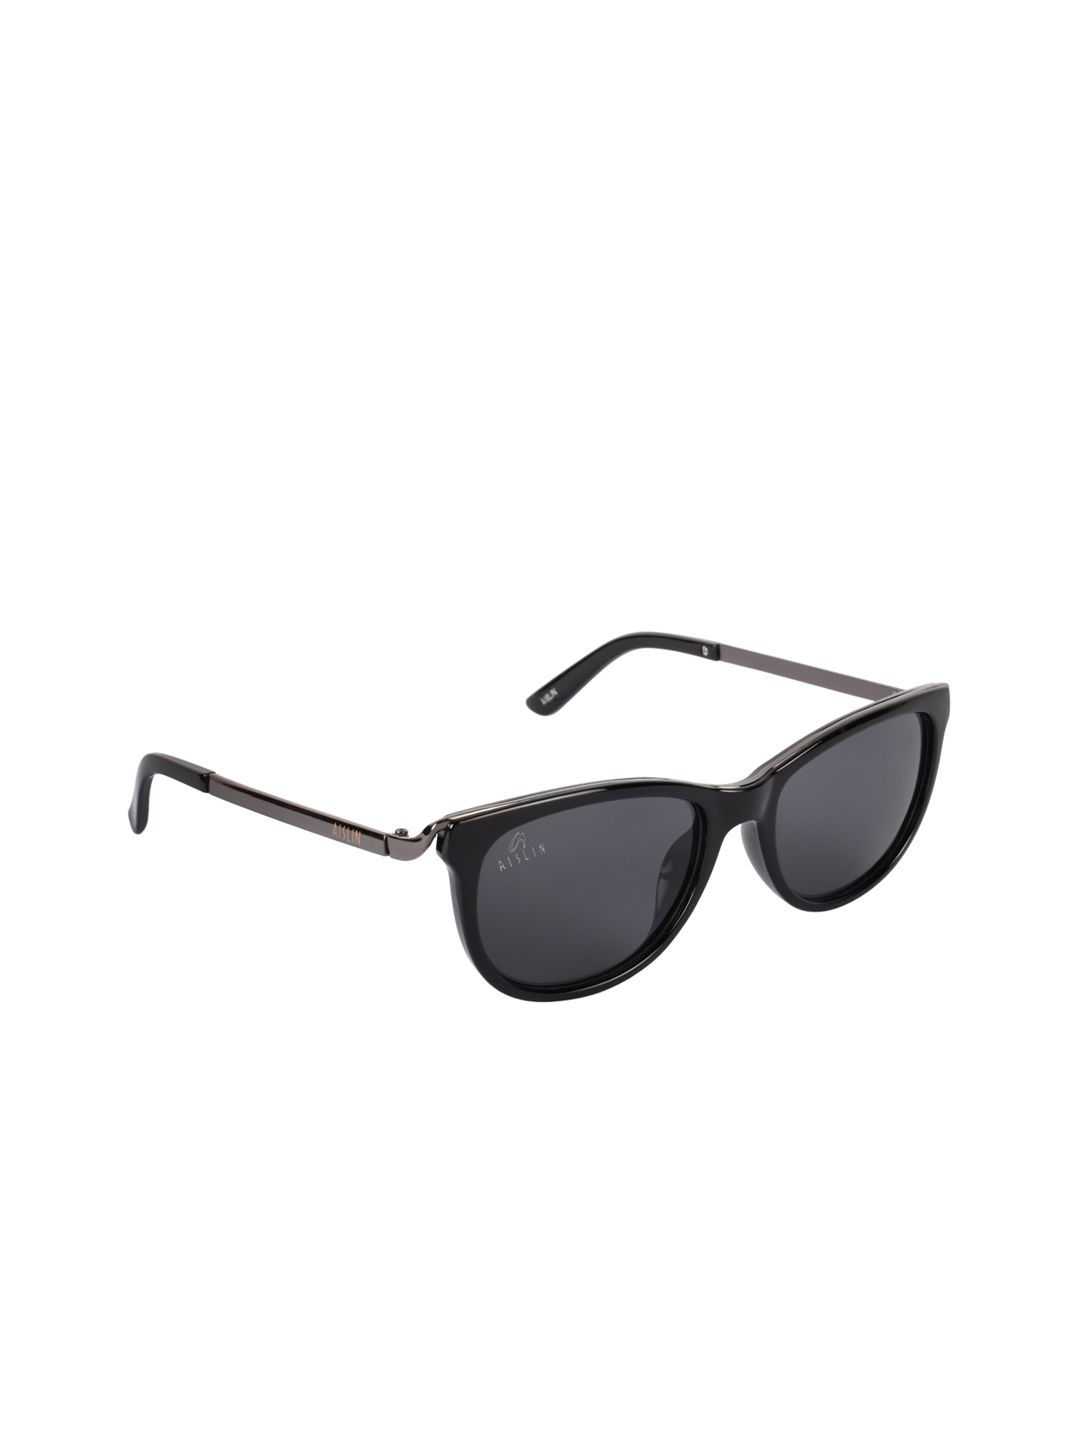 Aislin Women Grey UV Protected Wayfarer Sunglasses ES_14444-82-AS-1002 Price in India